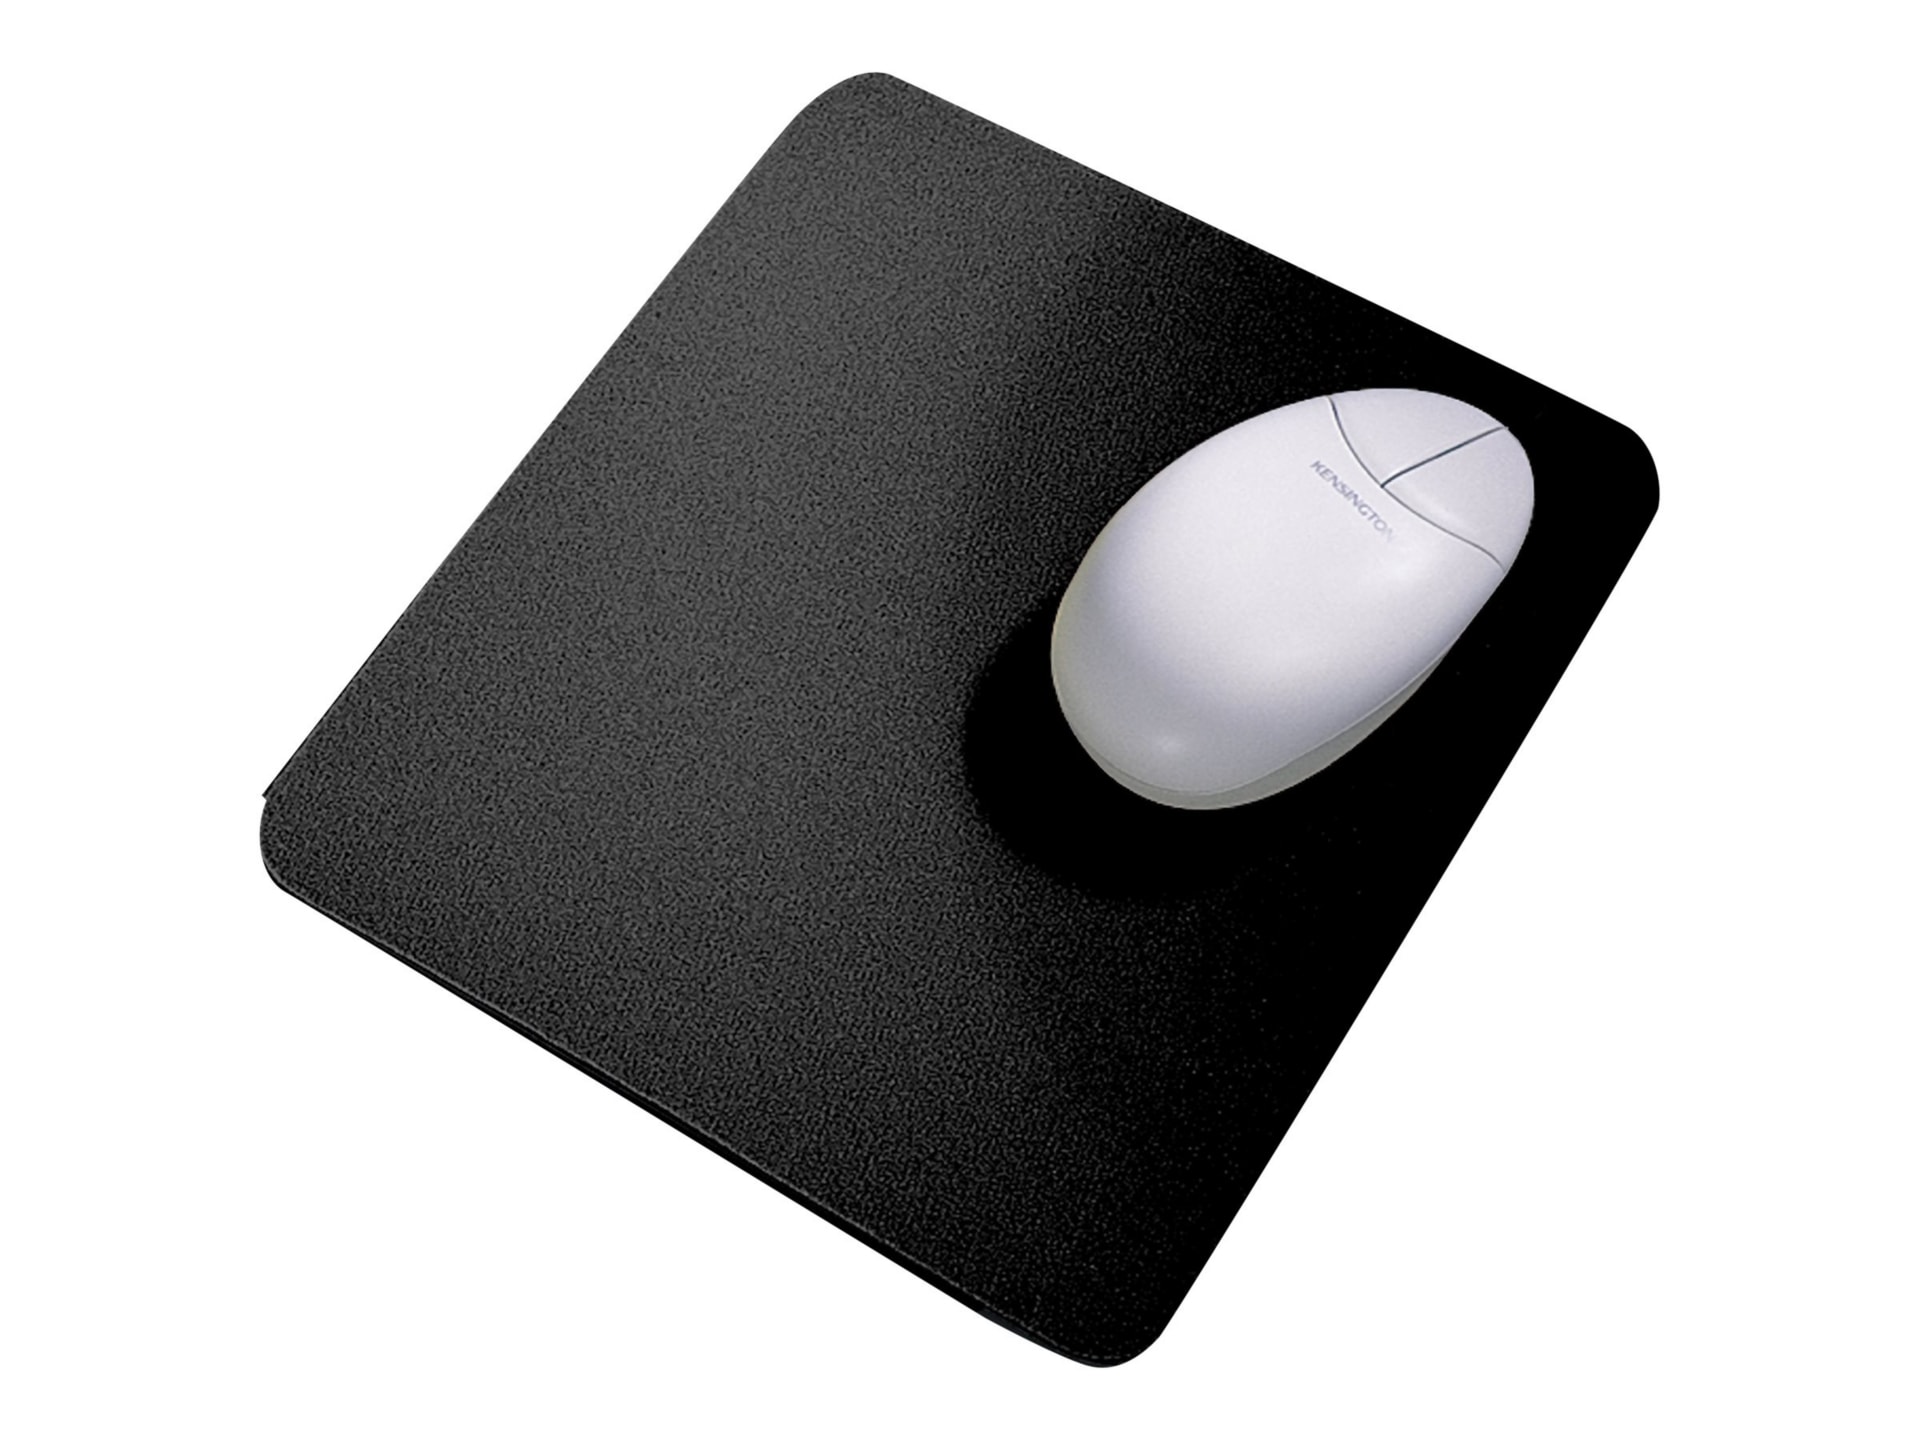 Kensington Optics-Enhancing Mouse Pad - mouse pad